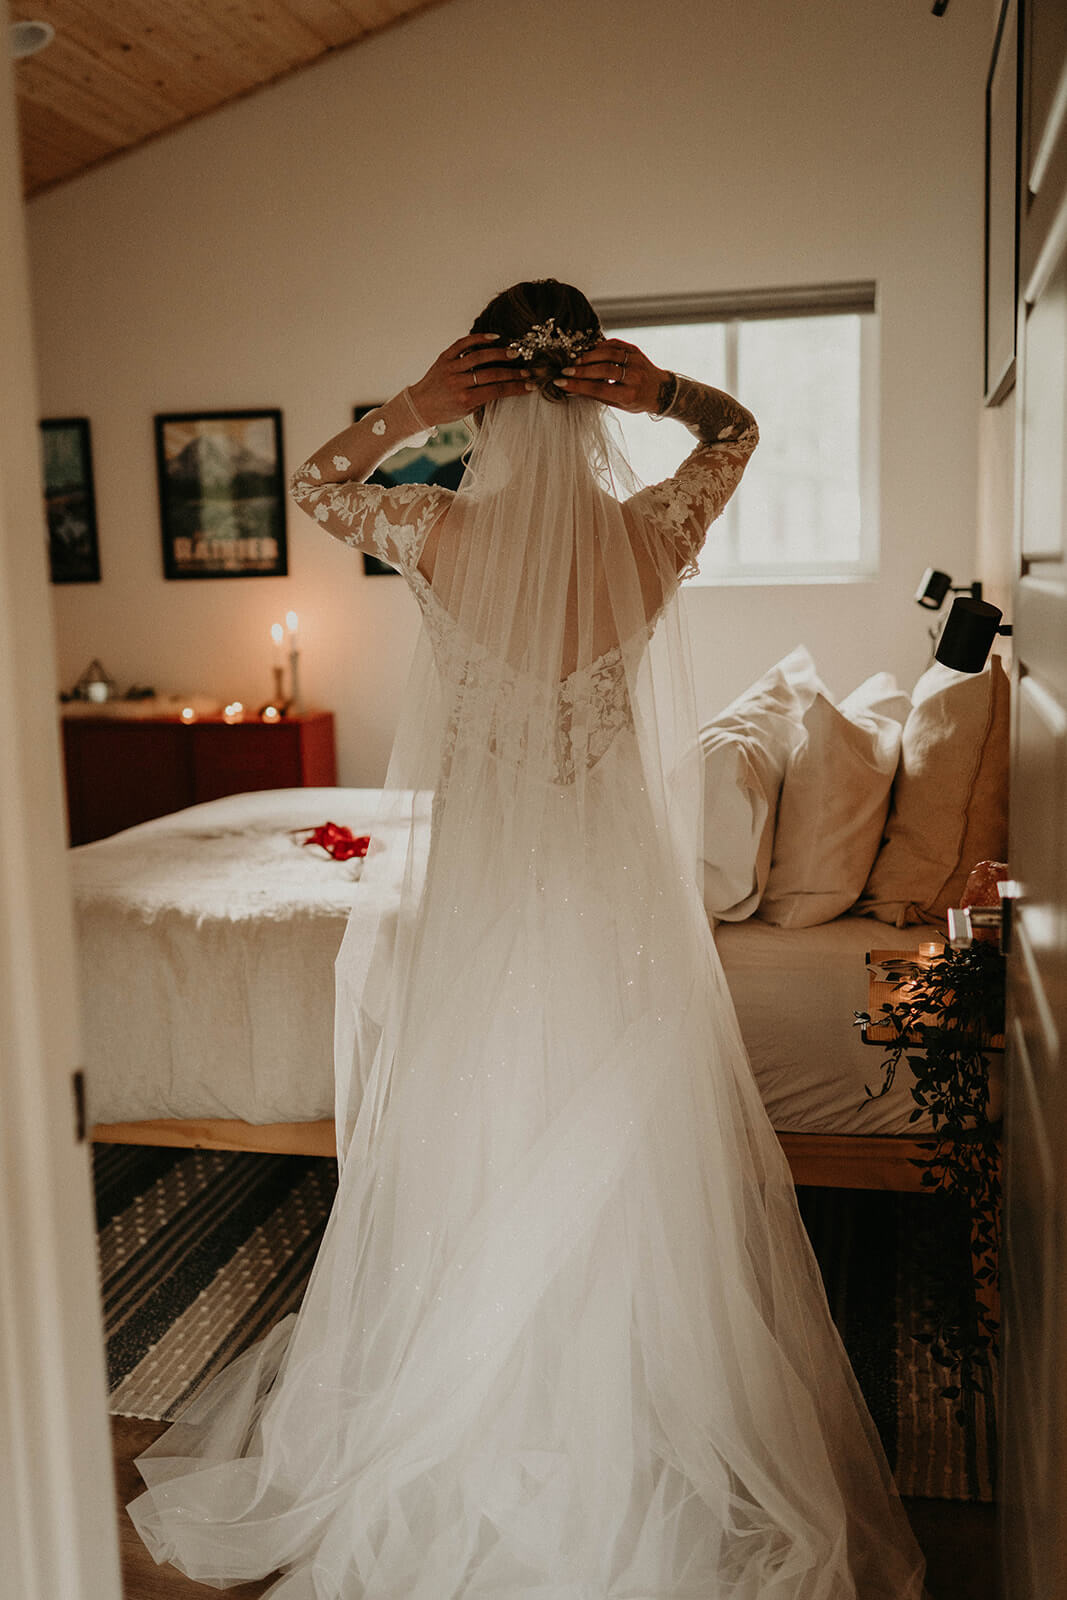 Bride adjusting veil while getting ready